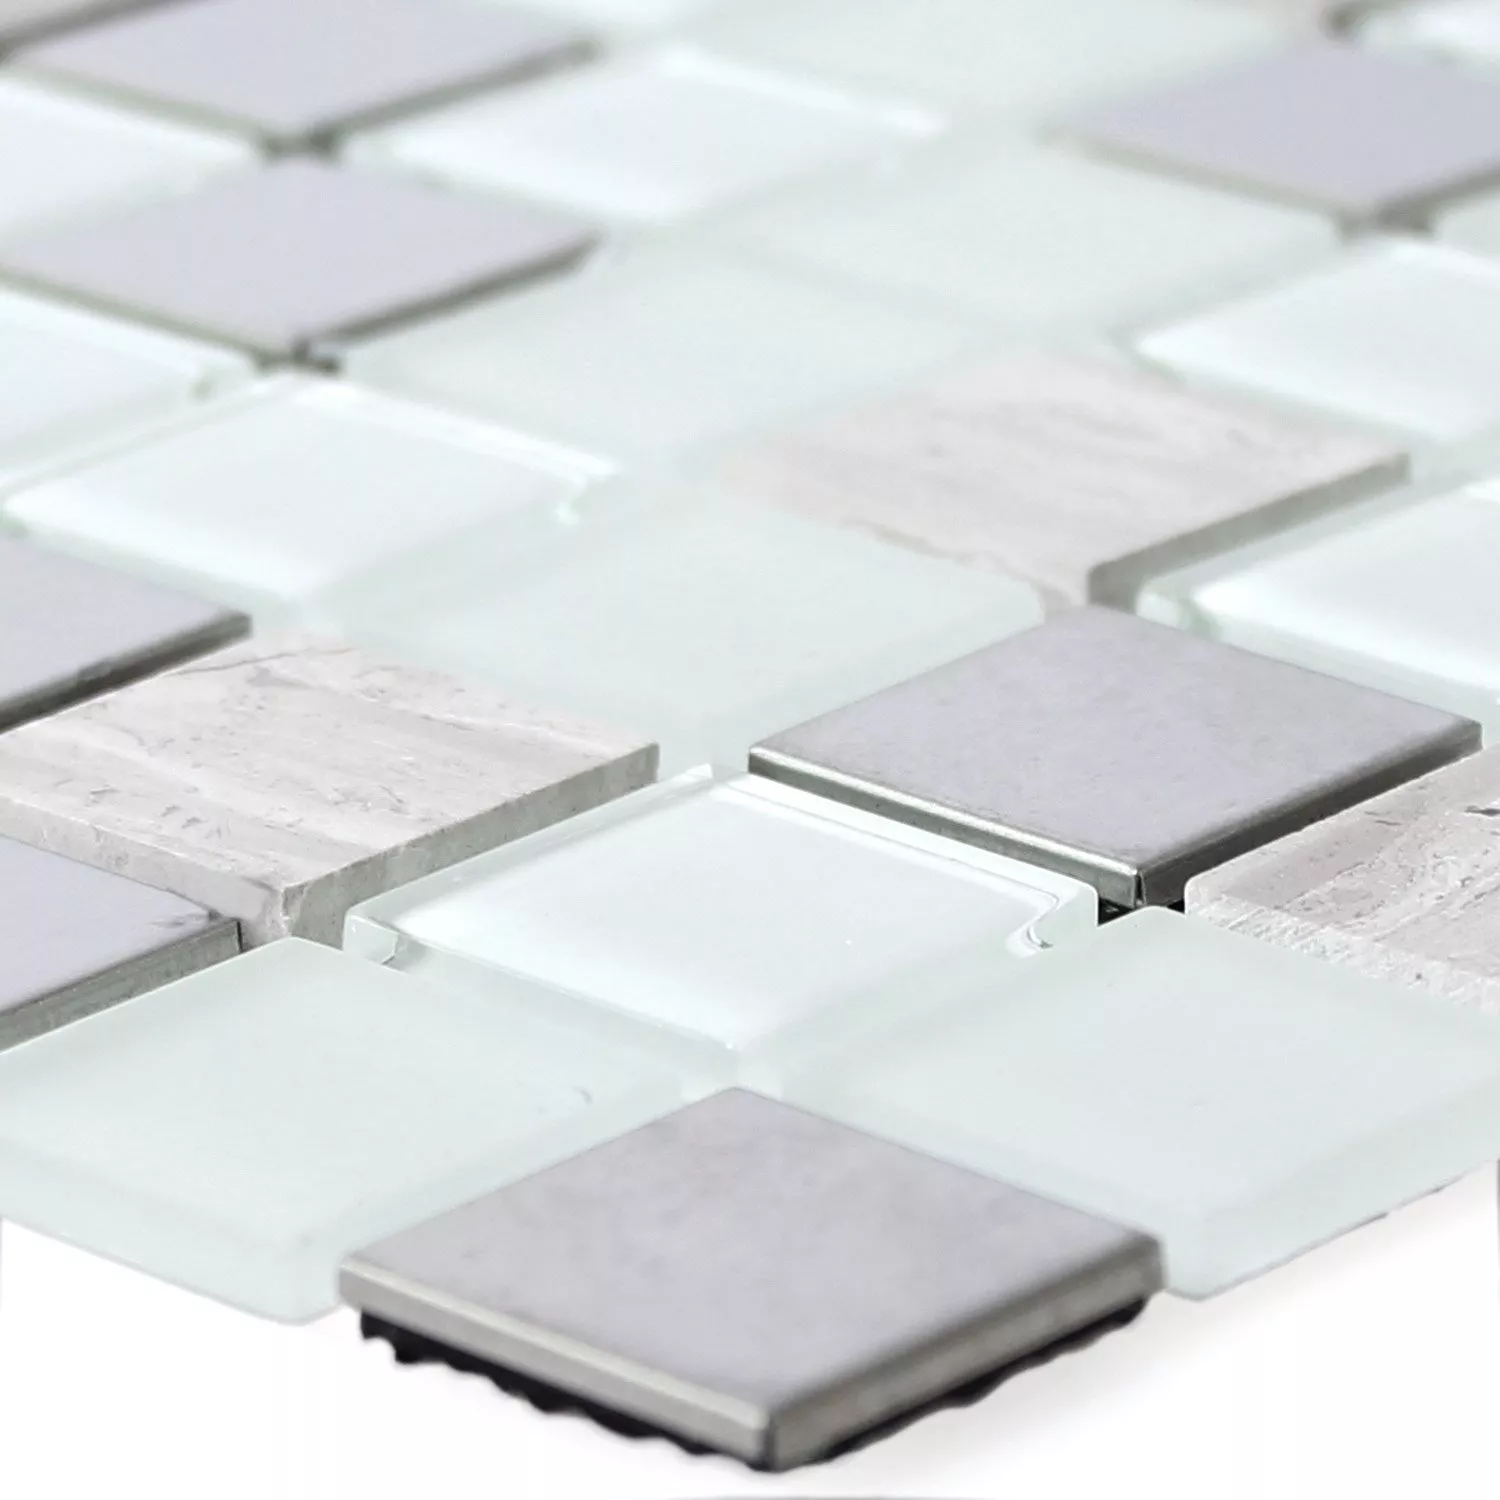 Sample Self Adhesive Metal Mosaic Tiles Glass White